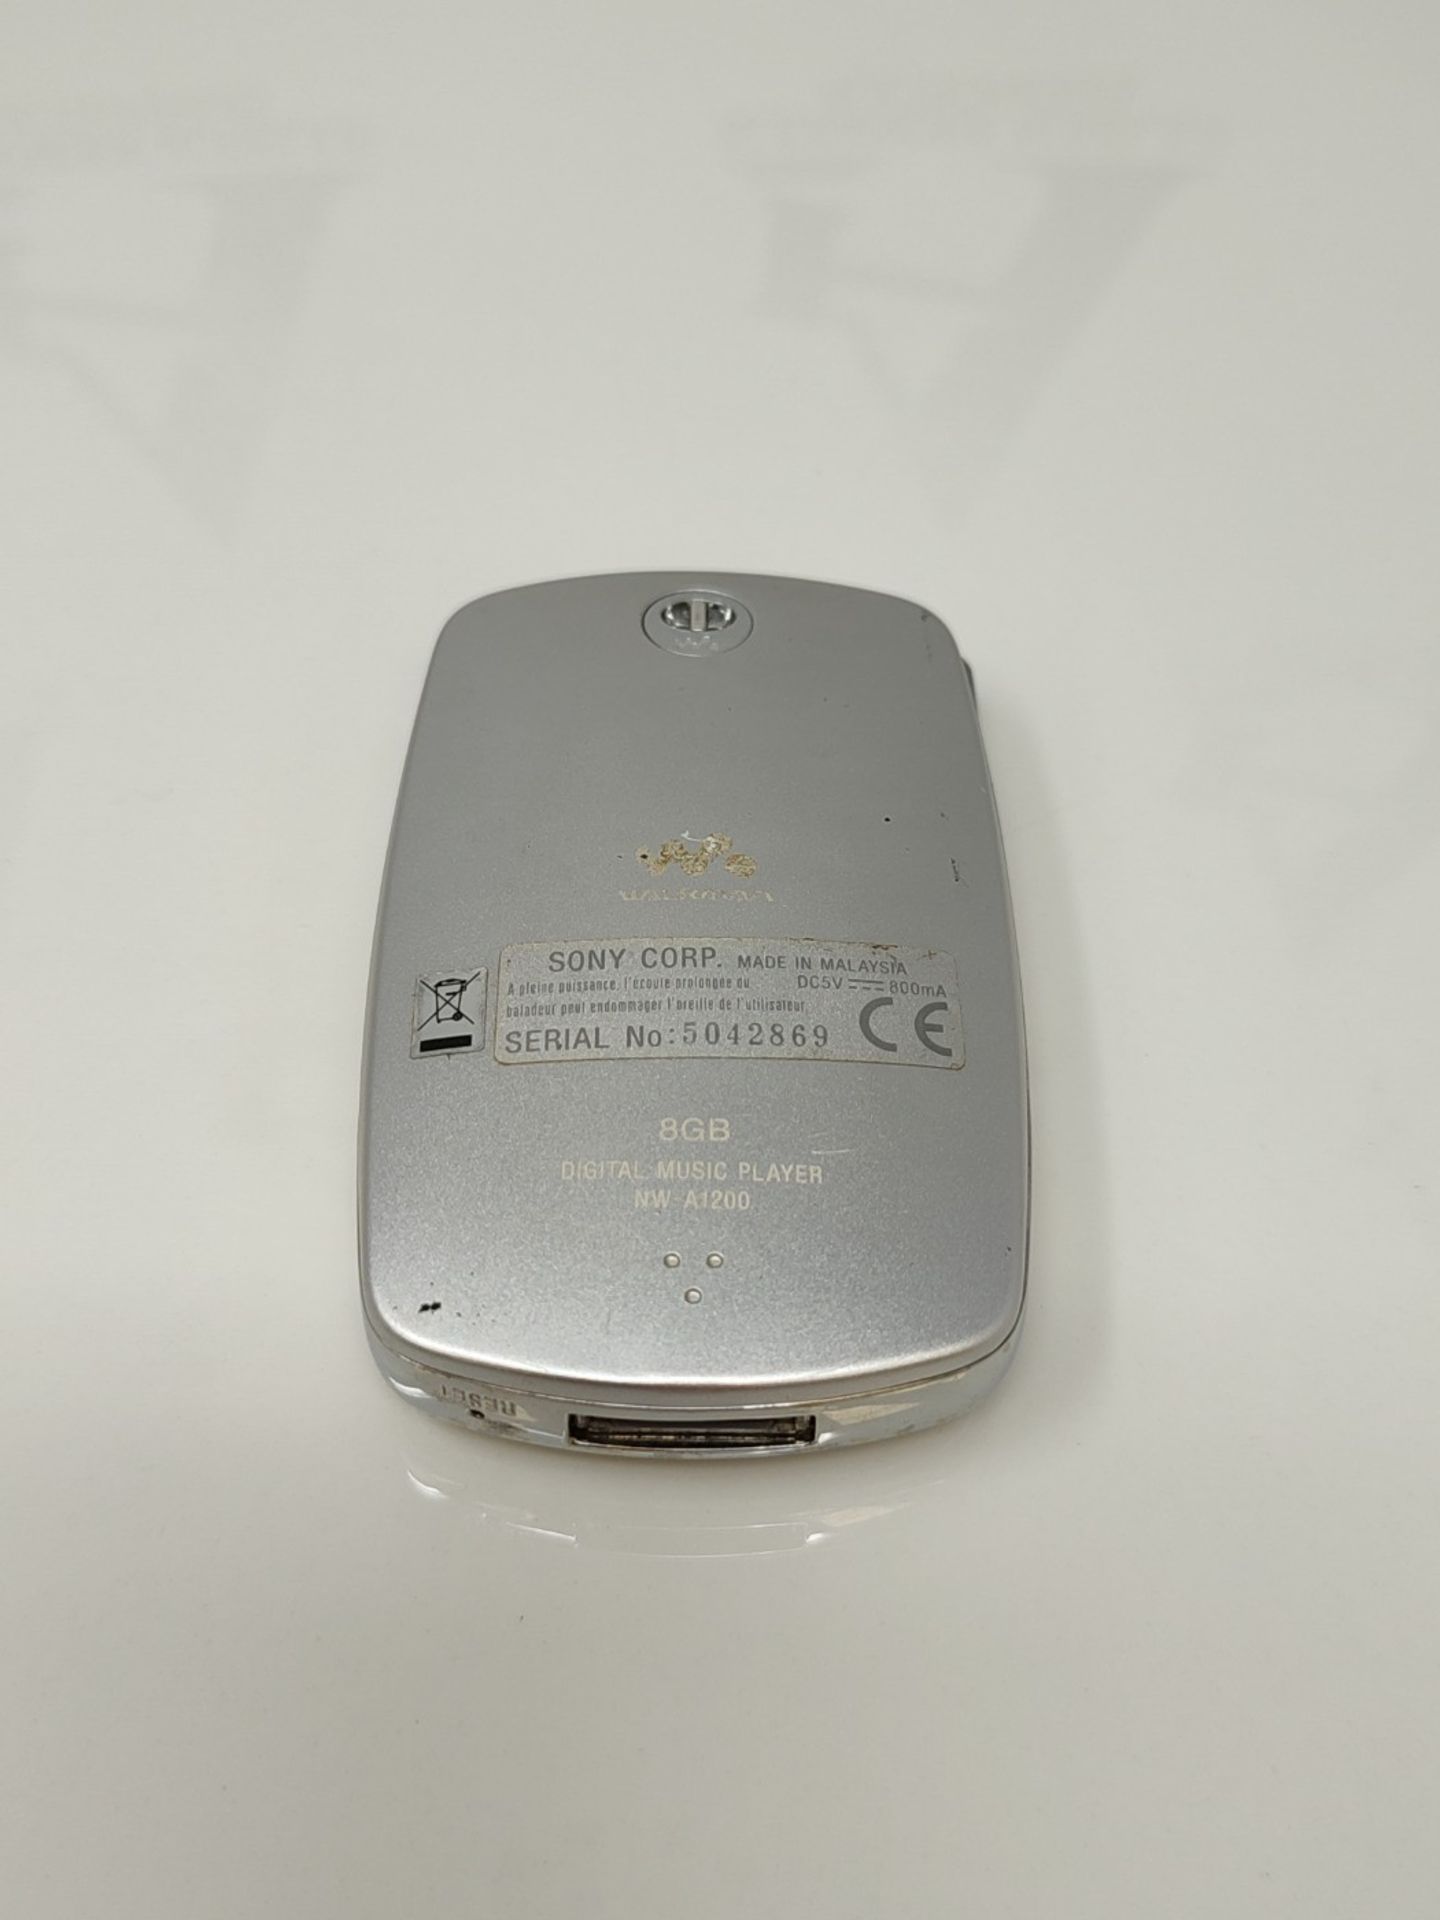 Sony Walkman NW-A1200 (8GB) Digital Media Player - Image 2 of 2